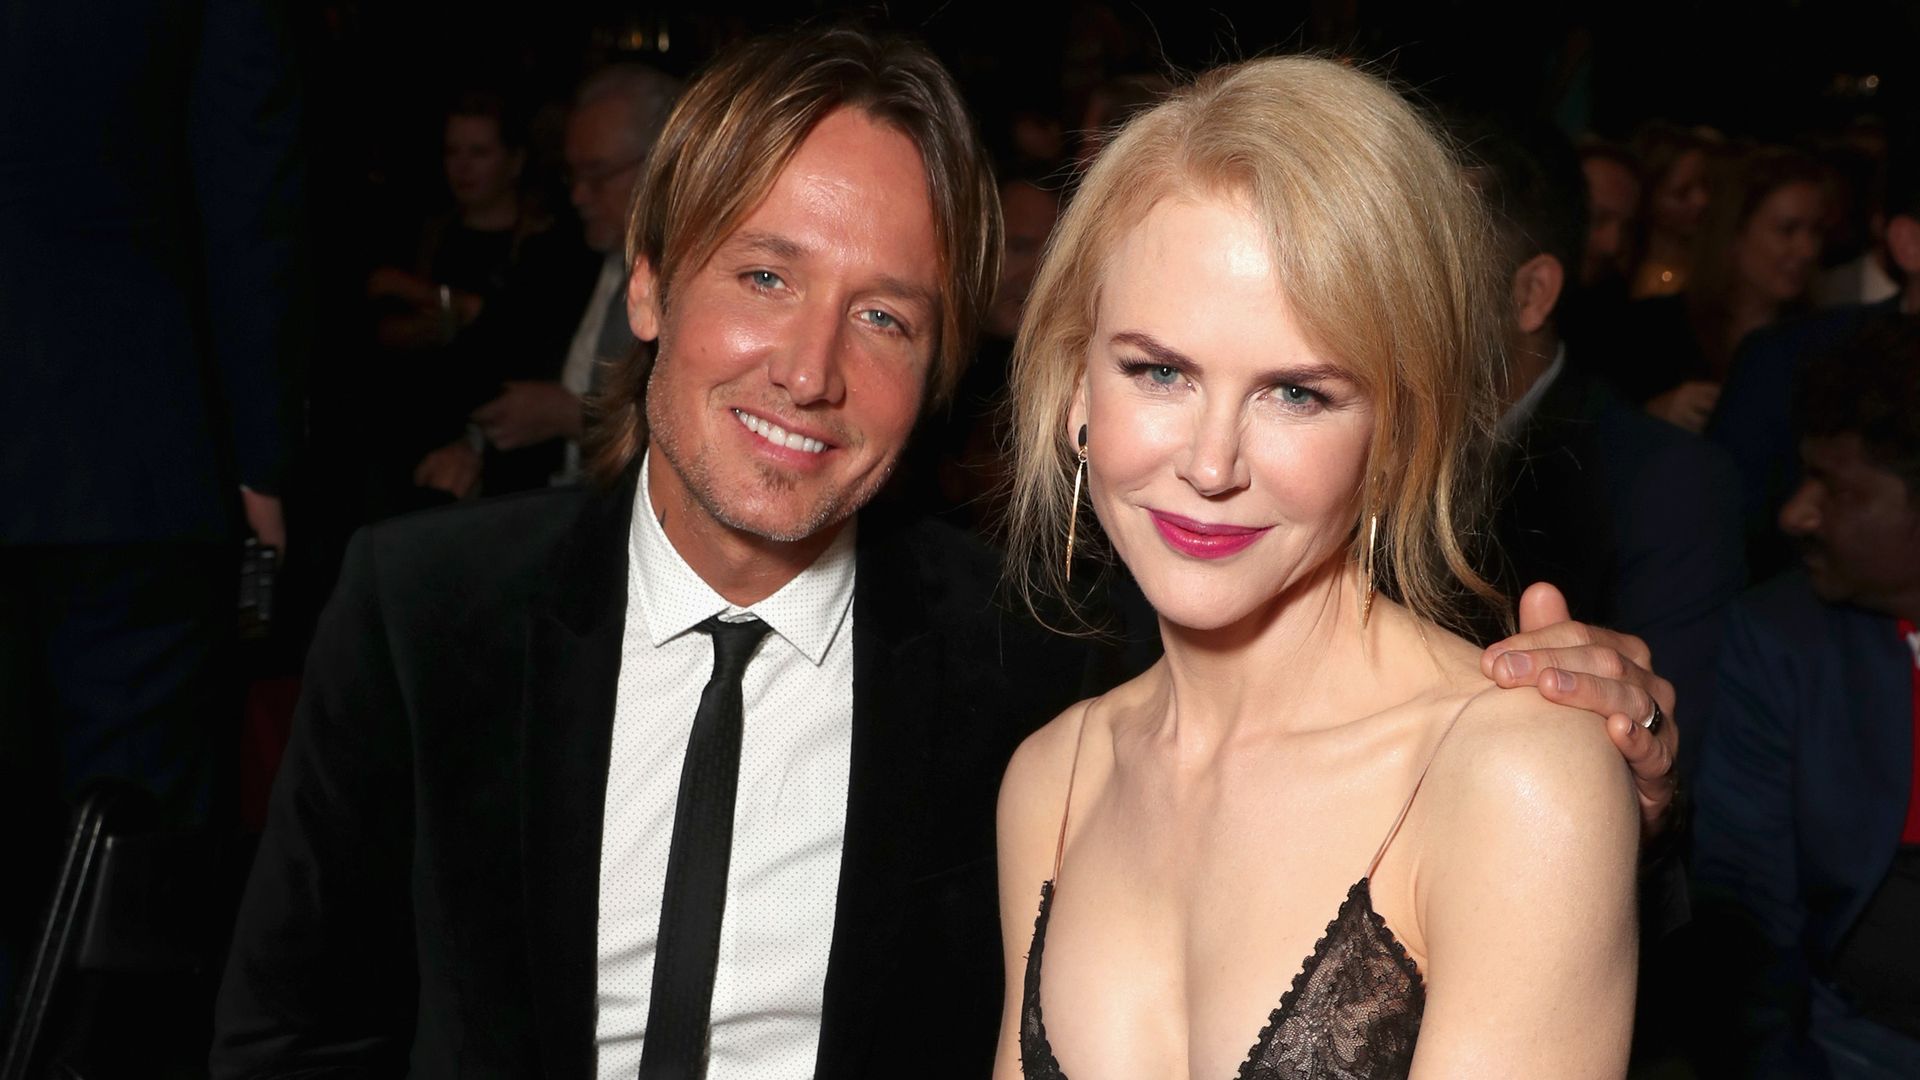 Nicole Kidman and Keith Urban at an awards event